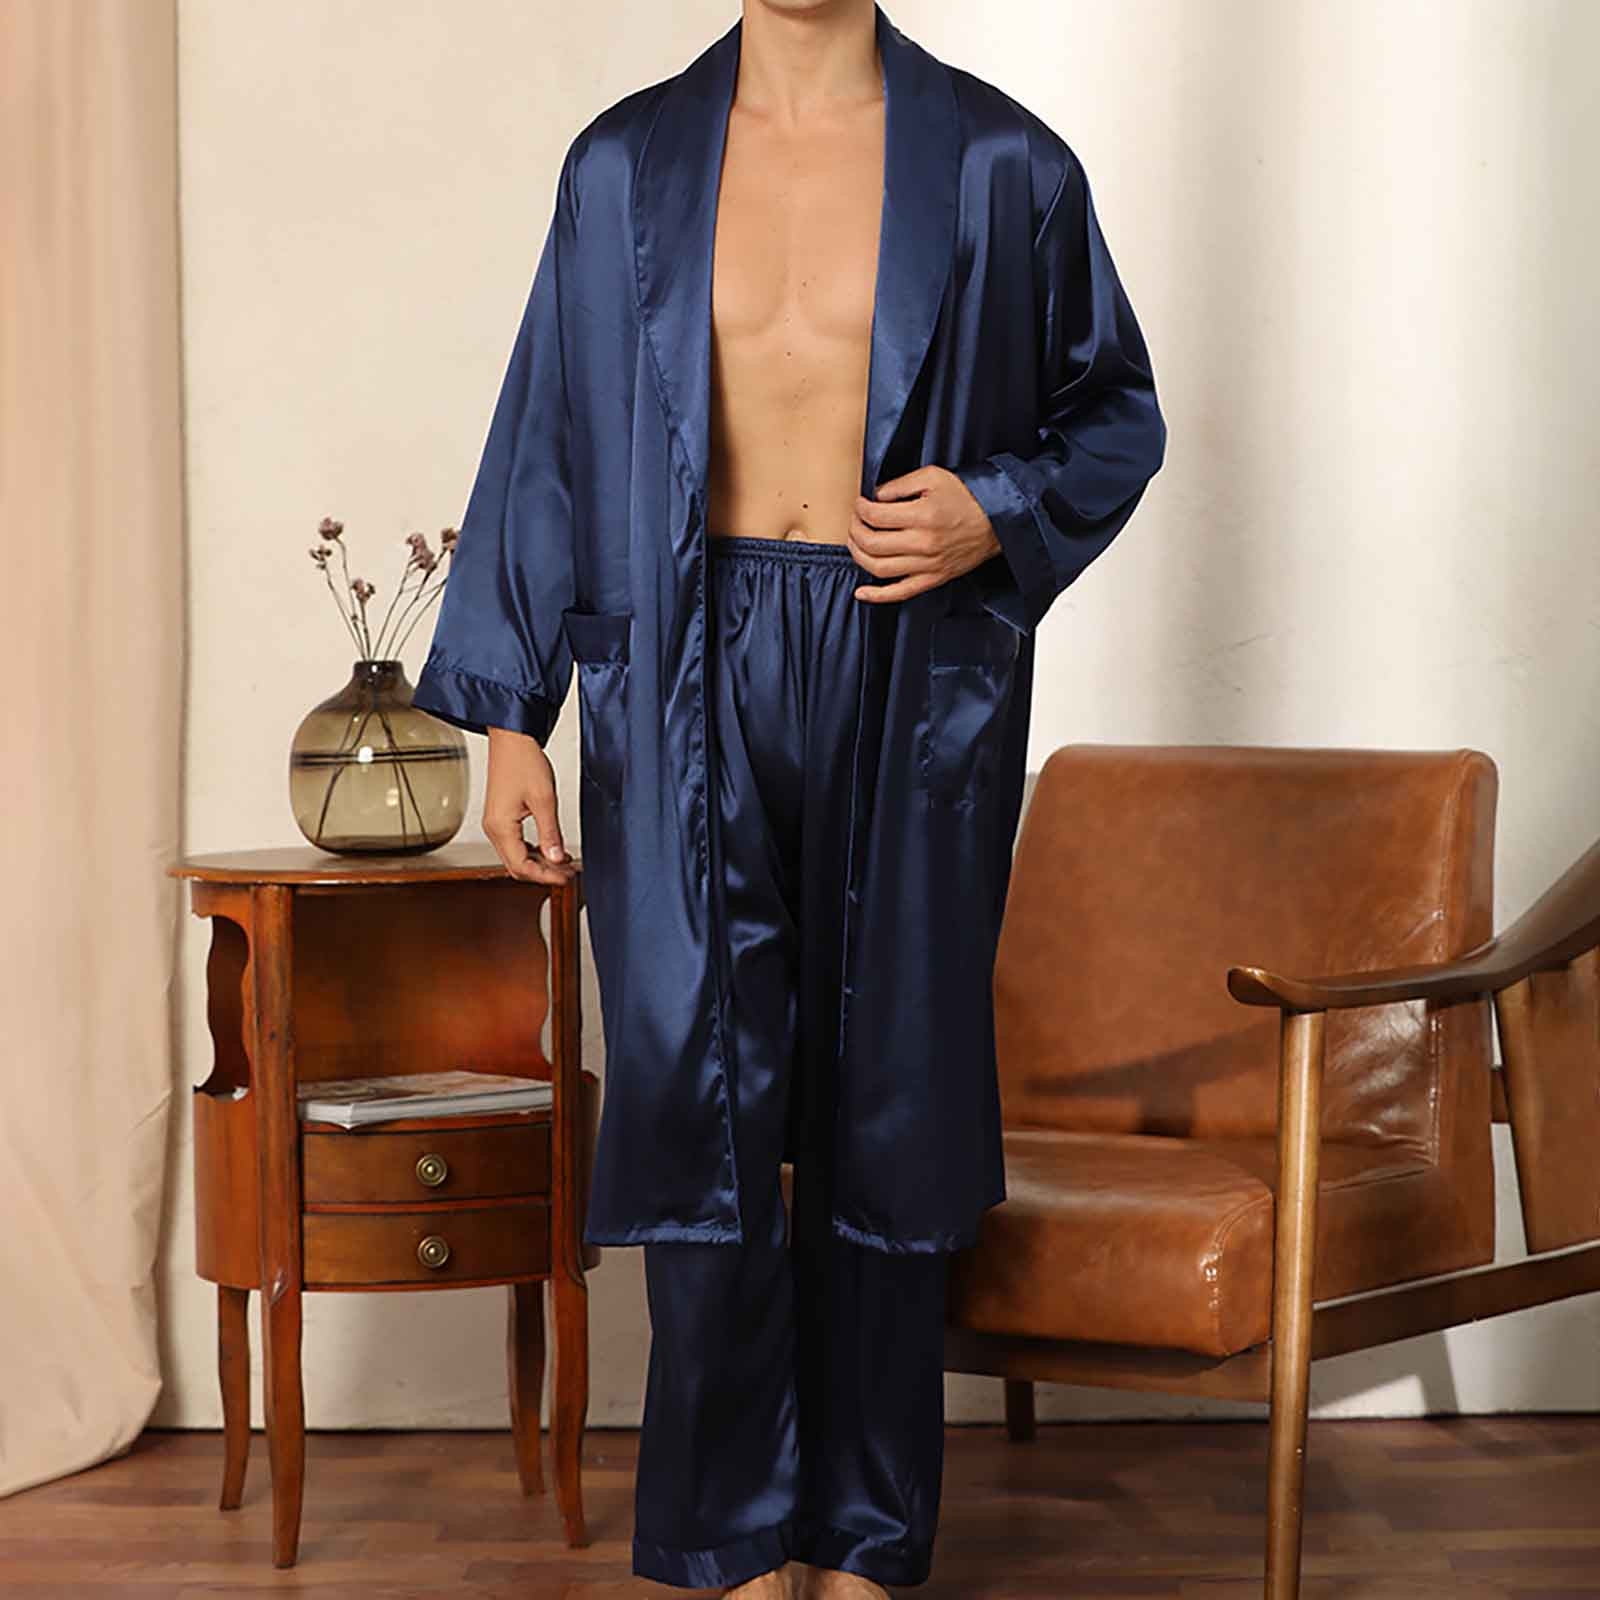 ASOS DESIGN pyjama set with long sleeve shirt and trousers in navy jersey   ASOS